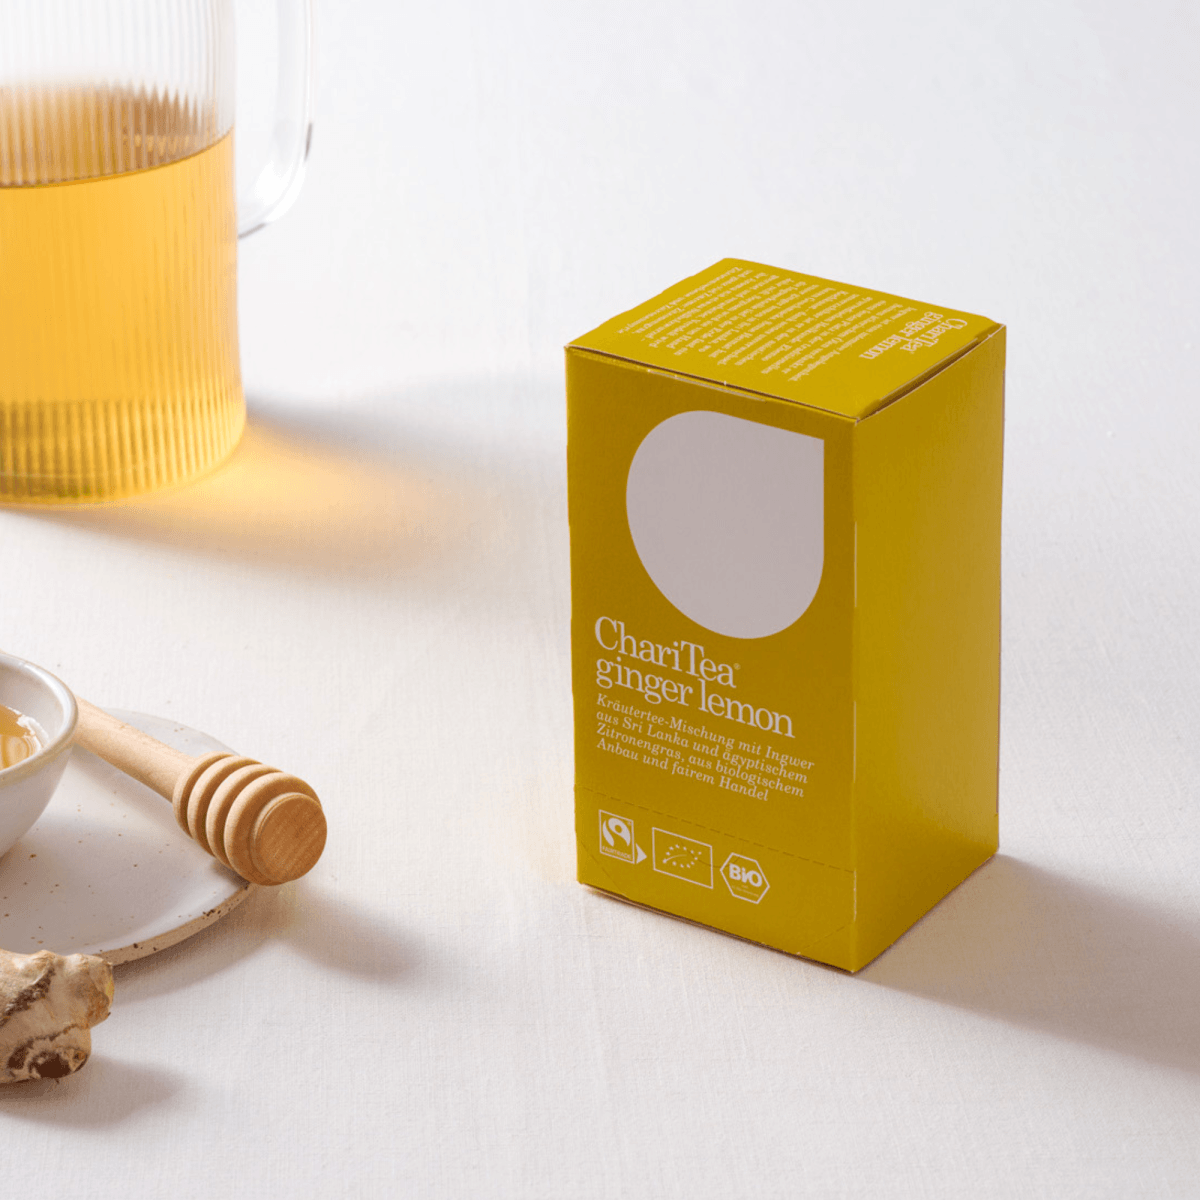 Bio Ingwer Tee Sri Lanka mit Zitrone - Fair Trade - ChariTea Ginger Lemon - 1